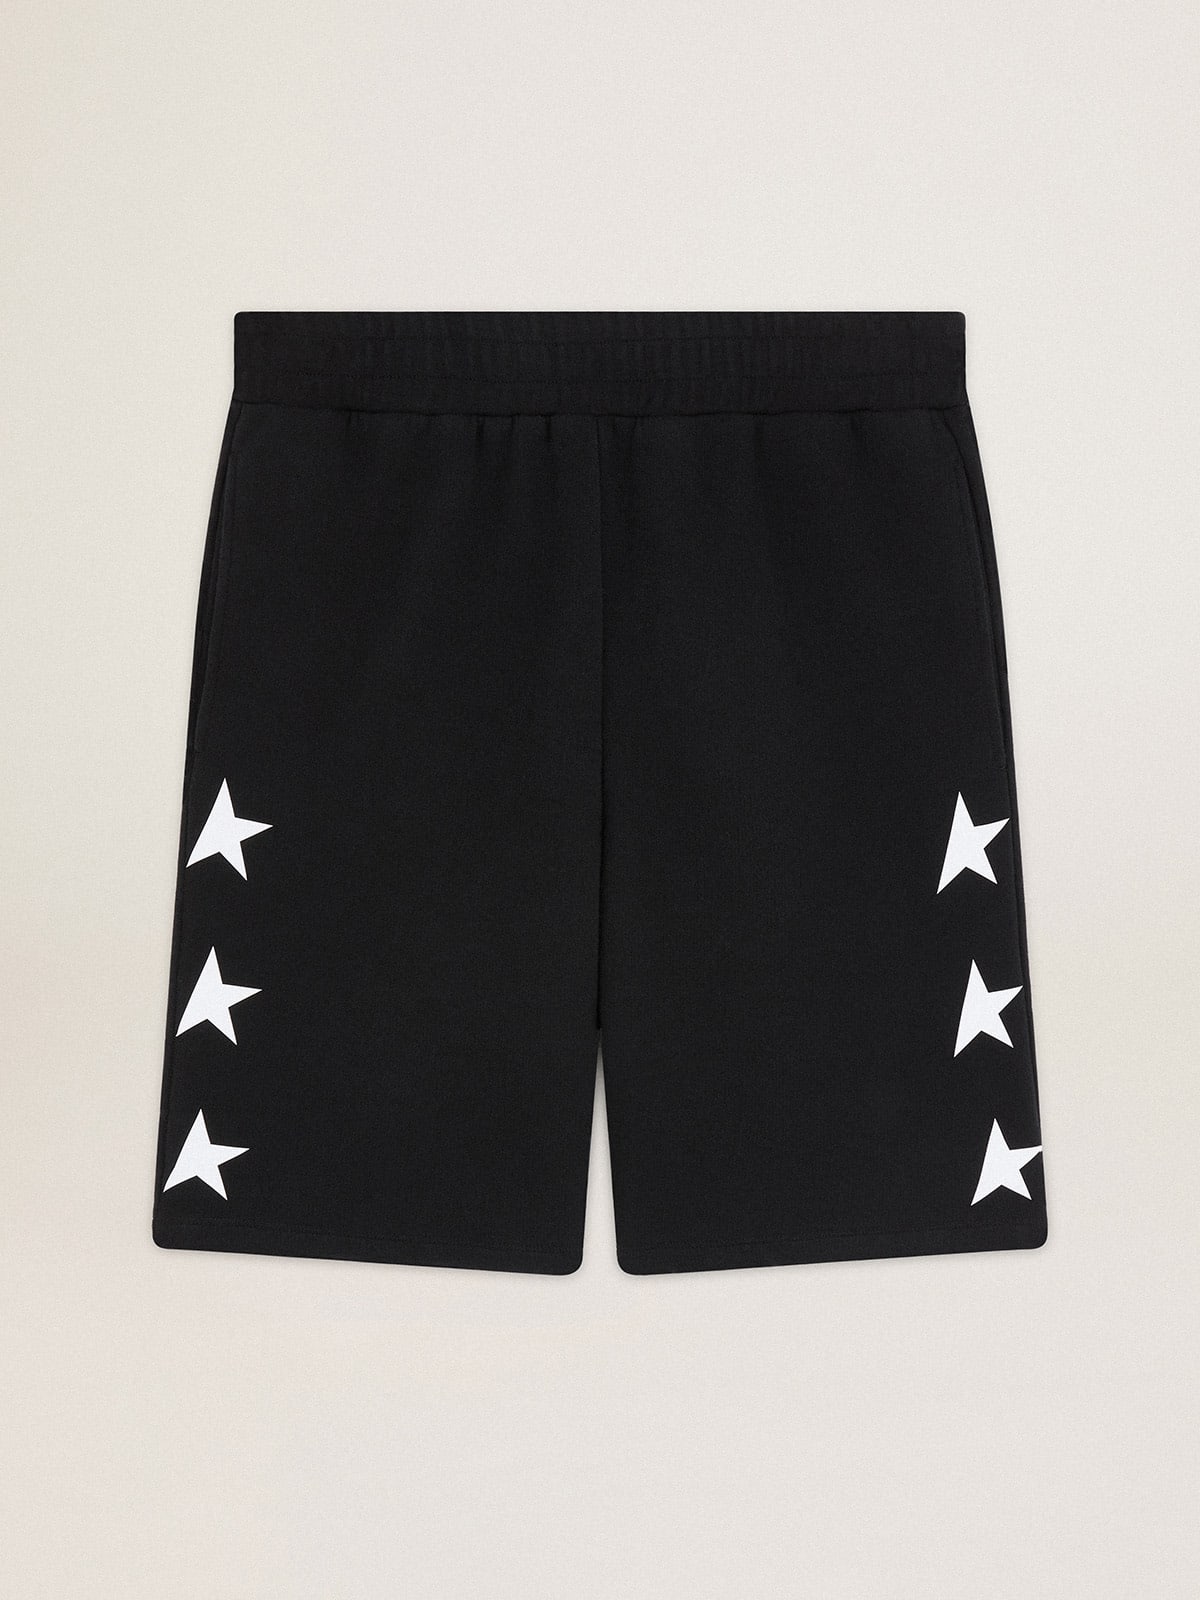 Men's black Bermuda shorts with contrasting white stars